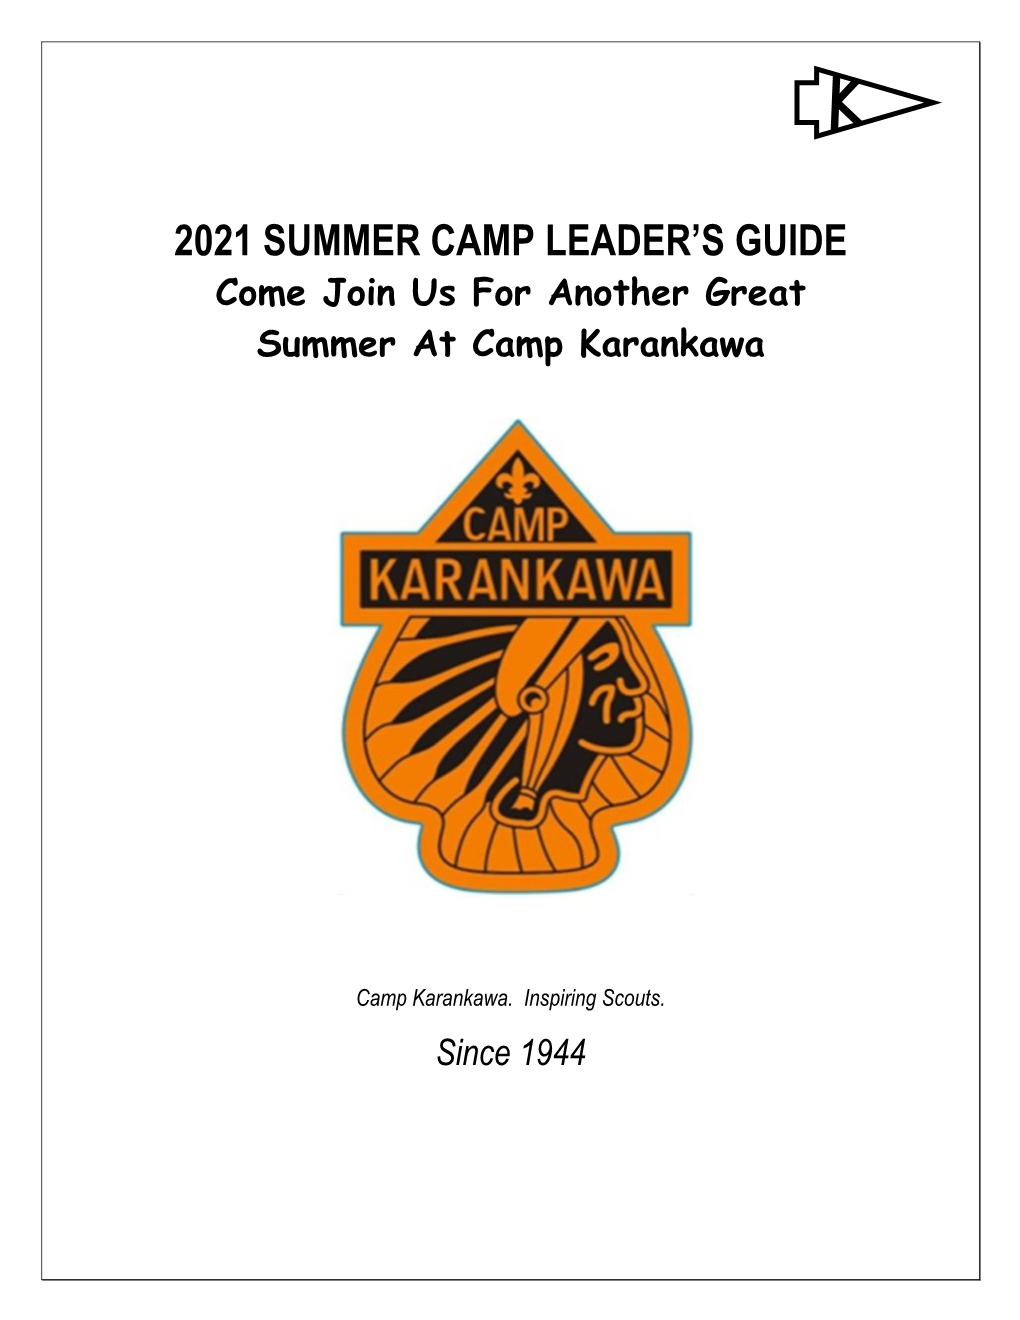 2021 Summer Camp Leaders Guide 5.11